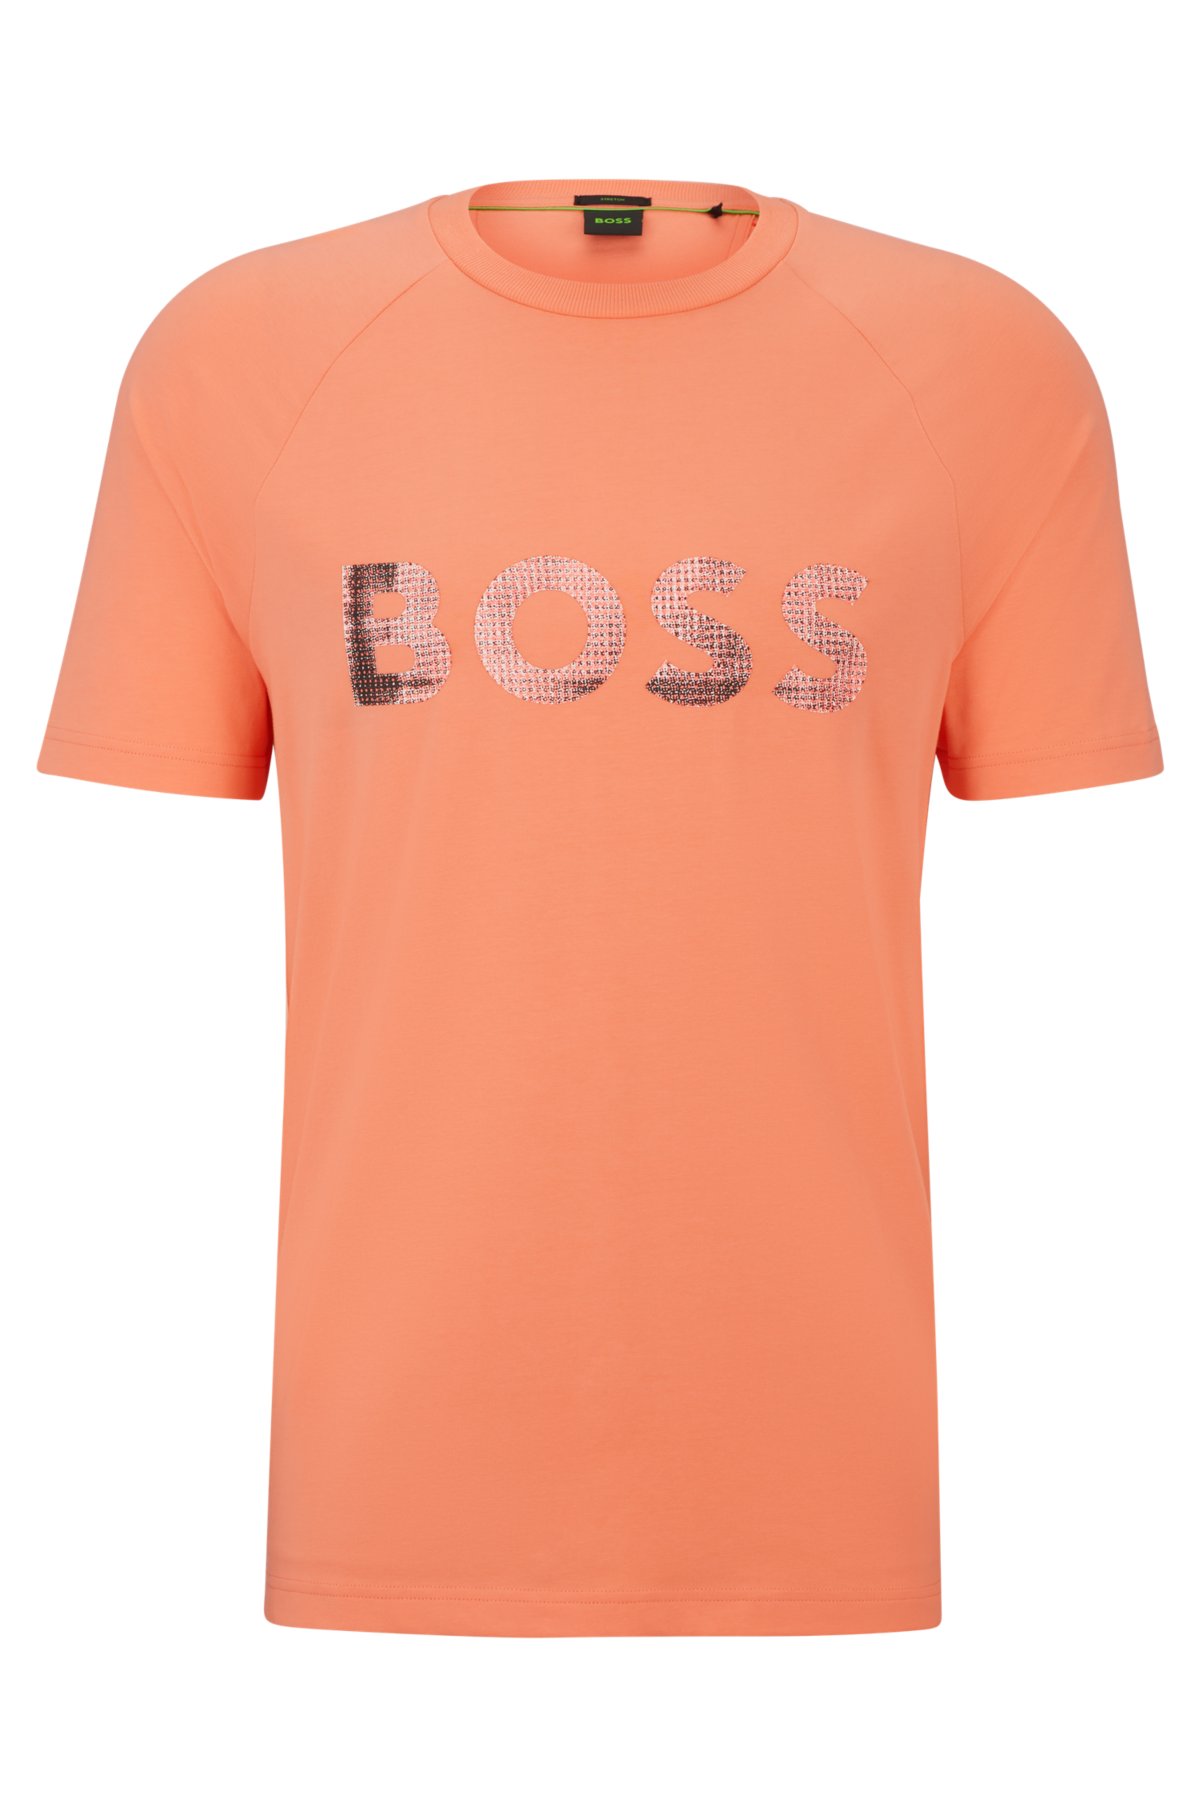 BOSS - Stretch-cotton regular-fit T-shirt with seasonal logo